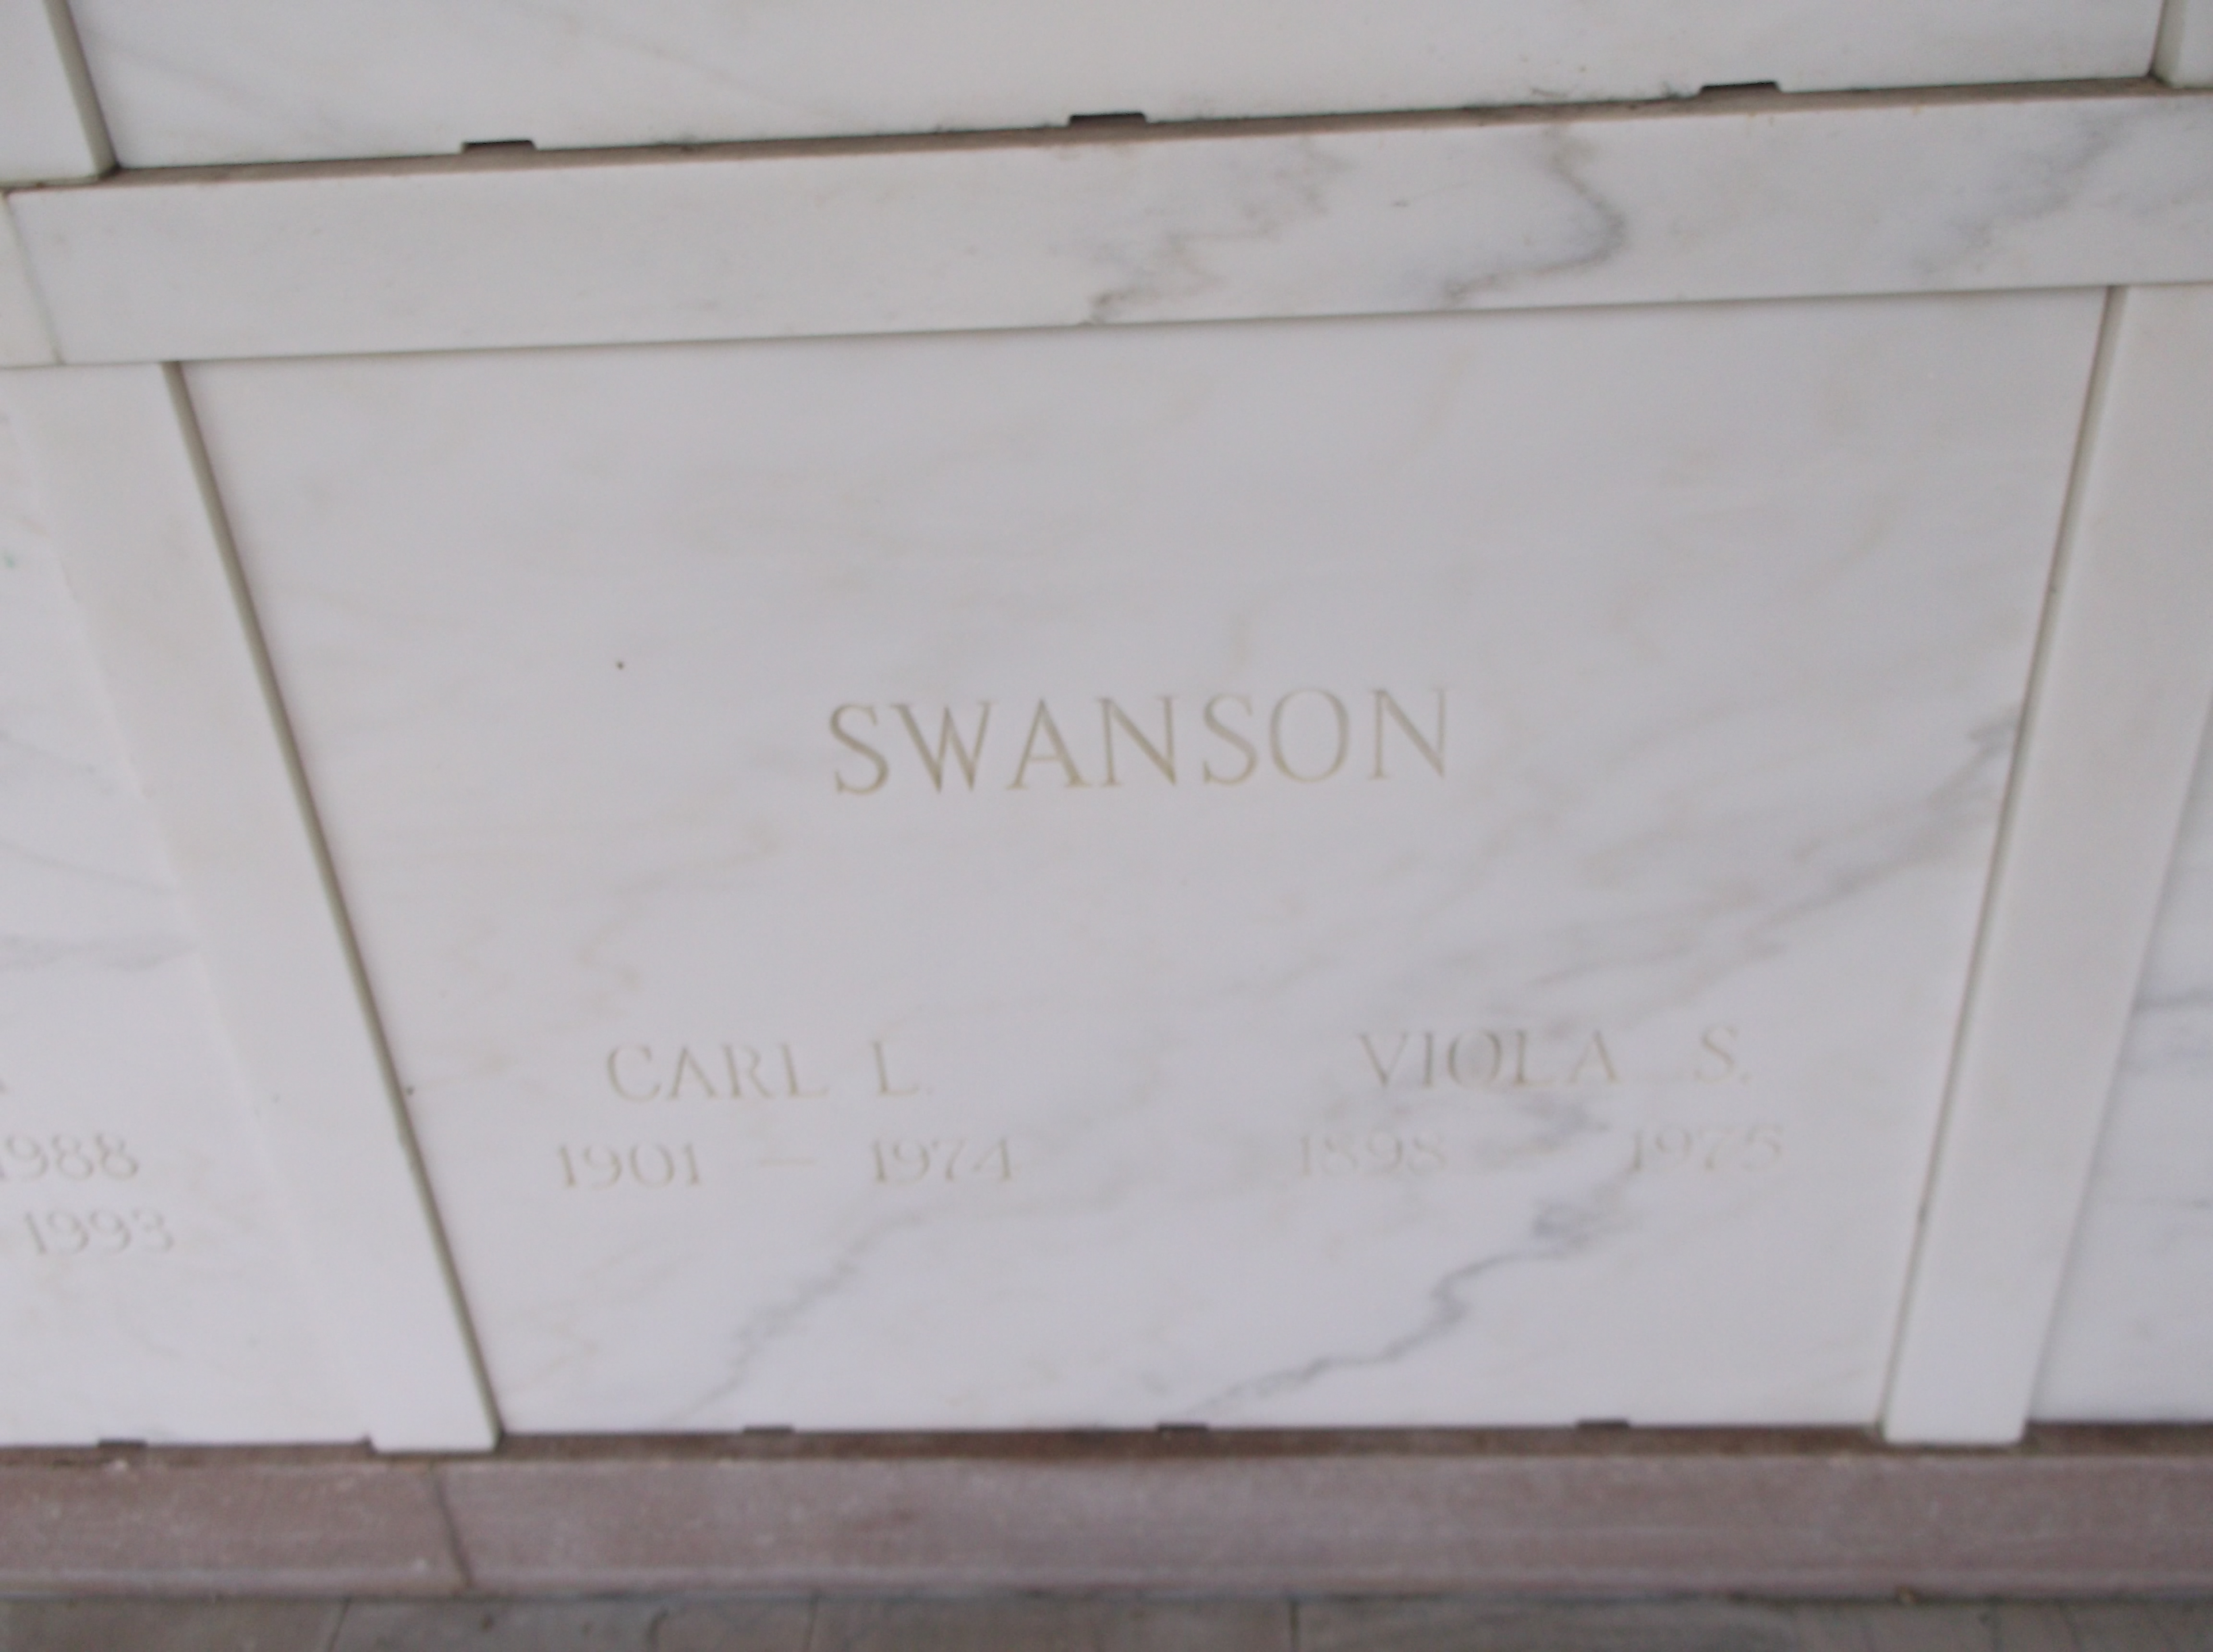 Carl L Swanson